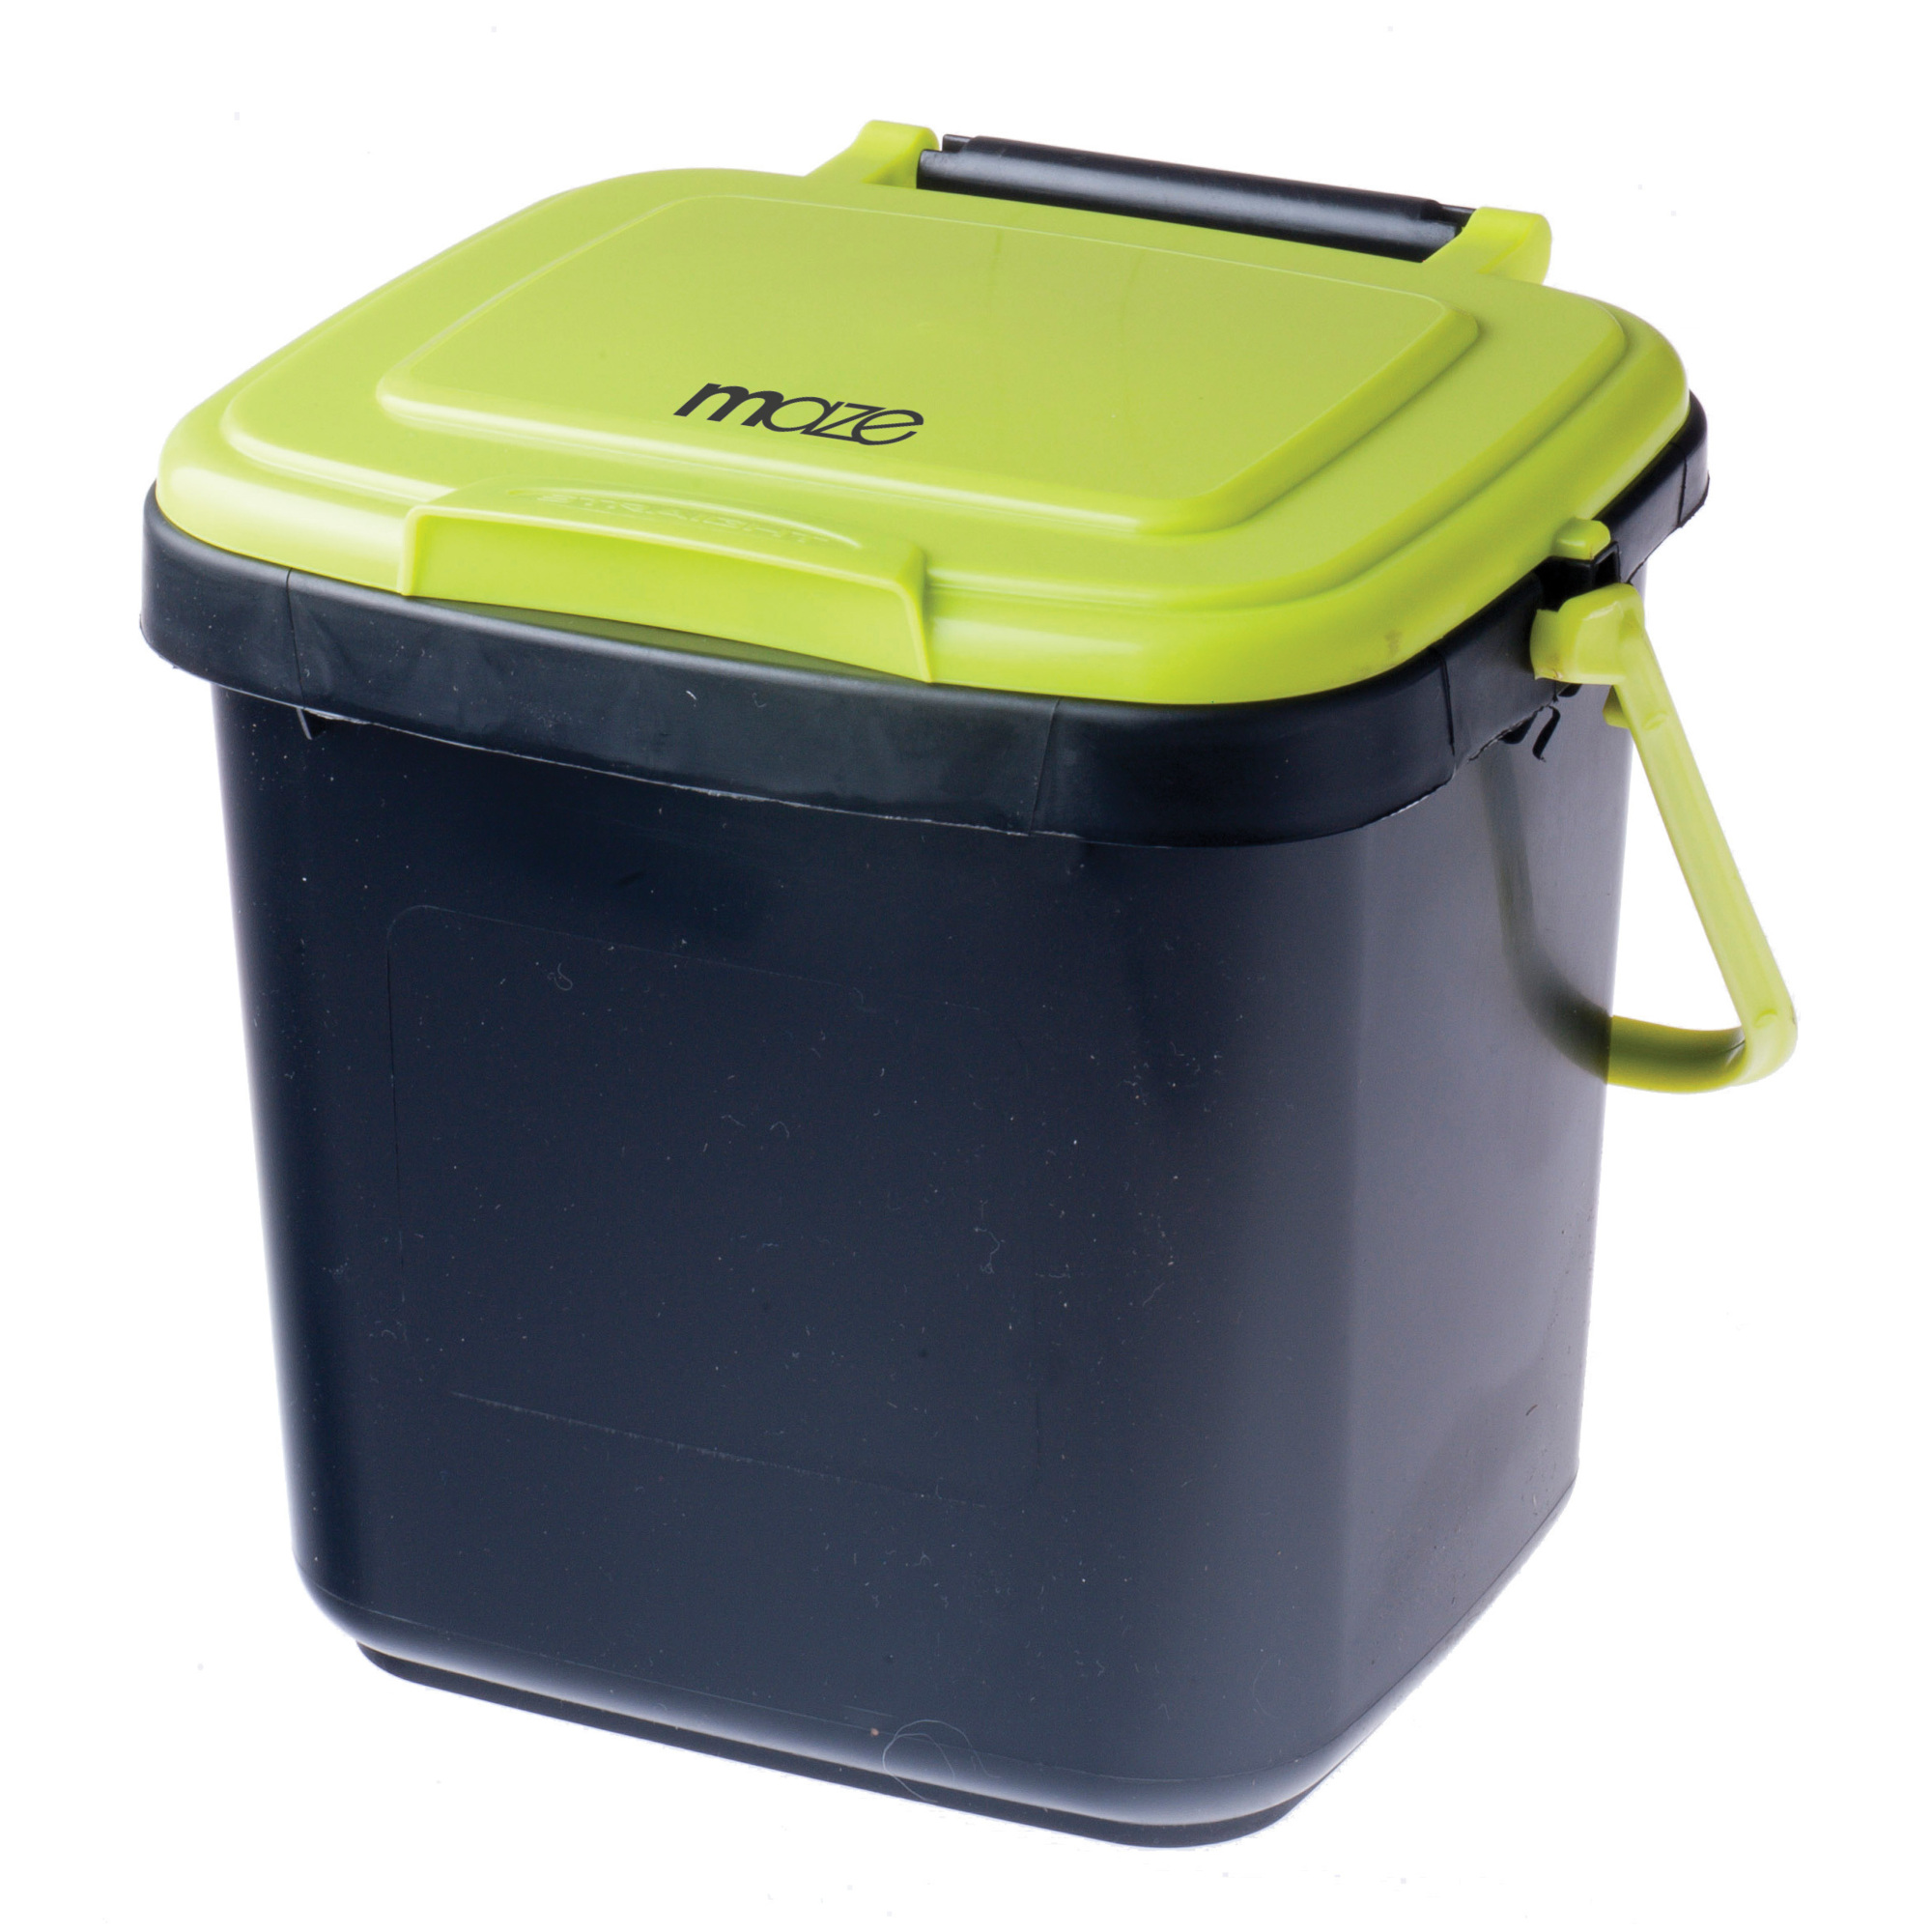 Maze Kitchen Caddie Compost Bin, Capacity 1.85 Gal, Model RSI-MC-C7